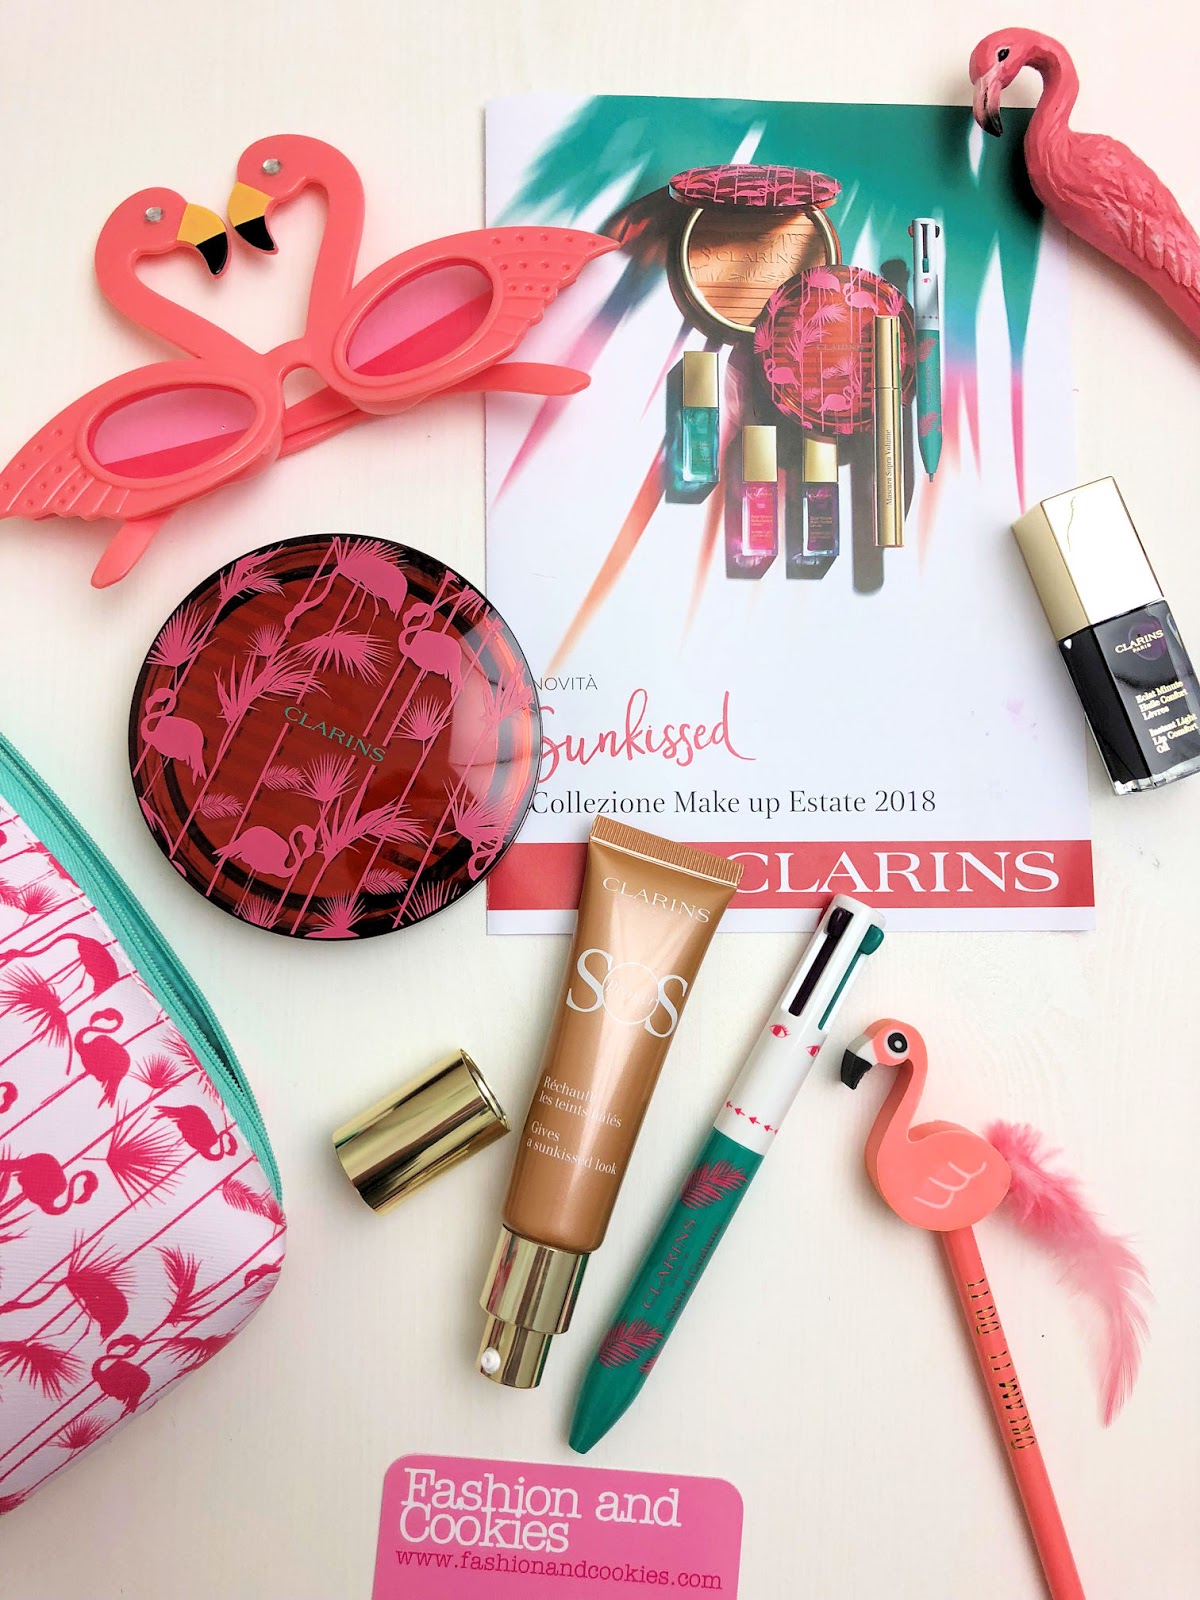 Clarins collezione makeup Estate 2018: Sunkissed su Fashion and Cookies fashion blog, fashion blogger style